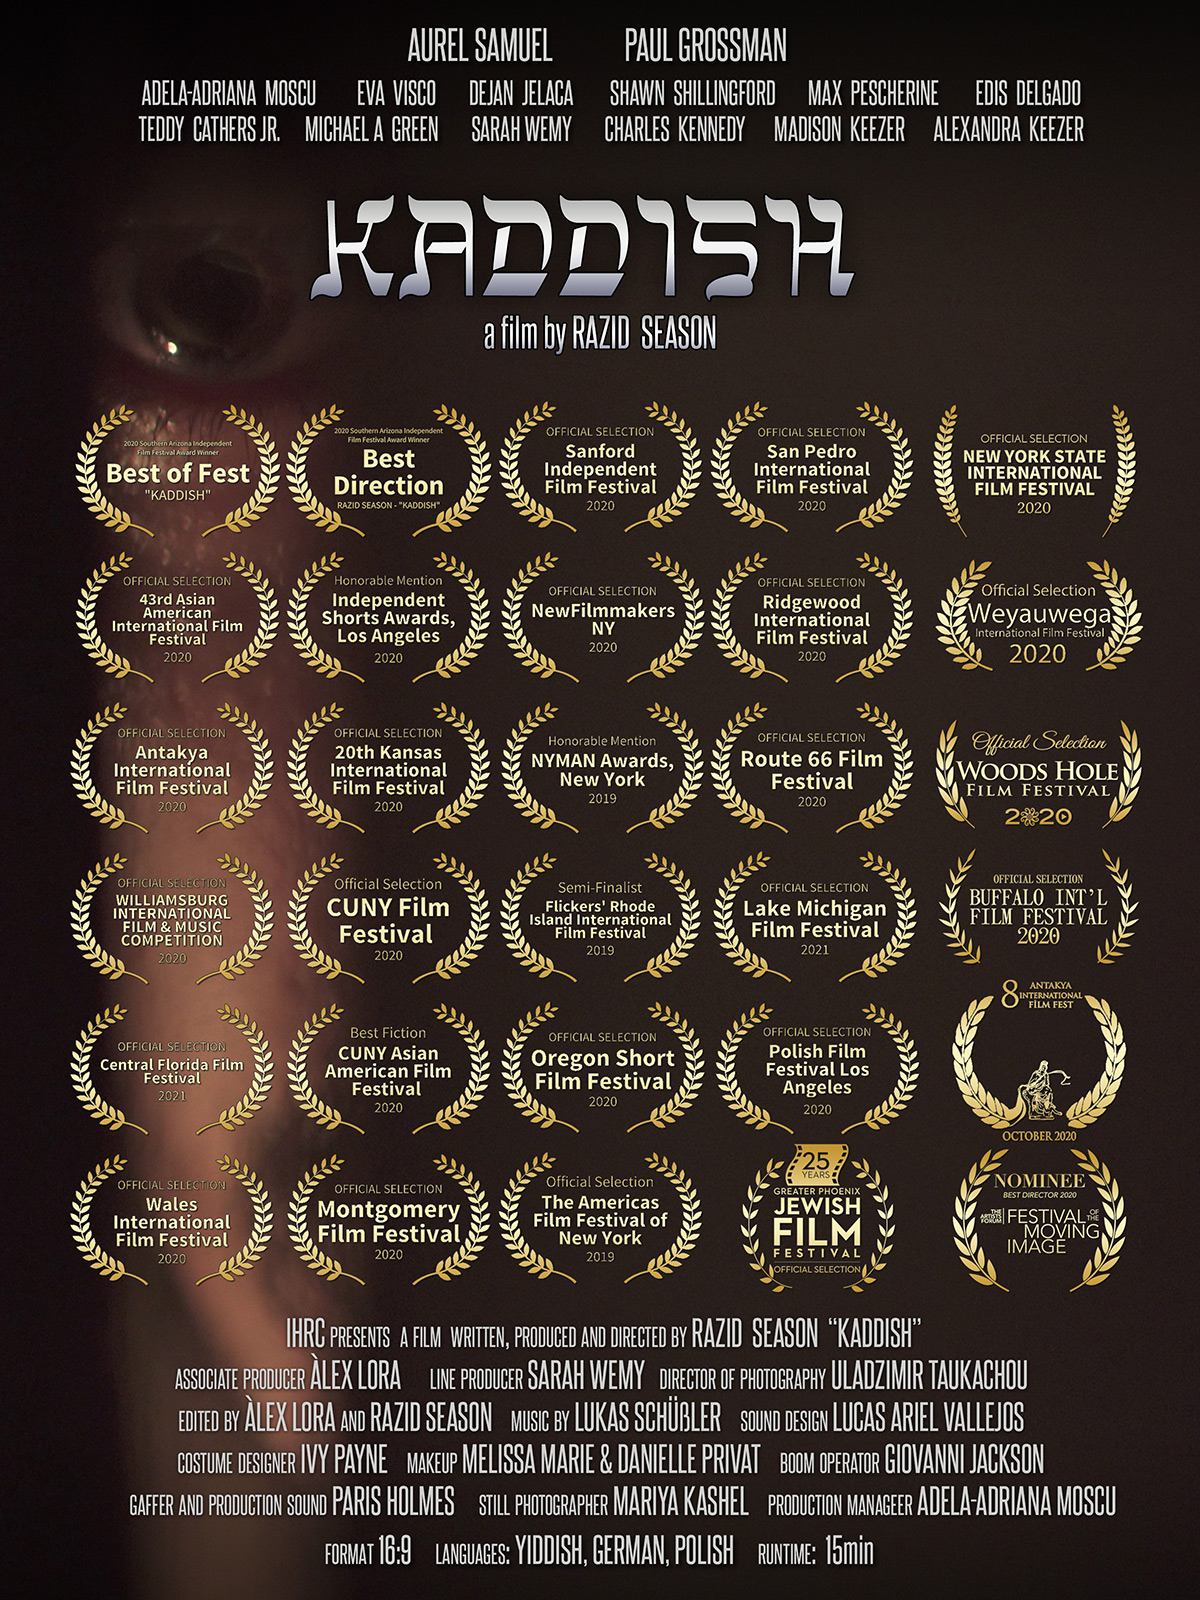 Kaddish film poster with laurels